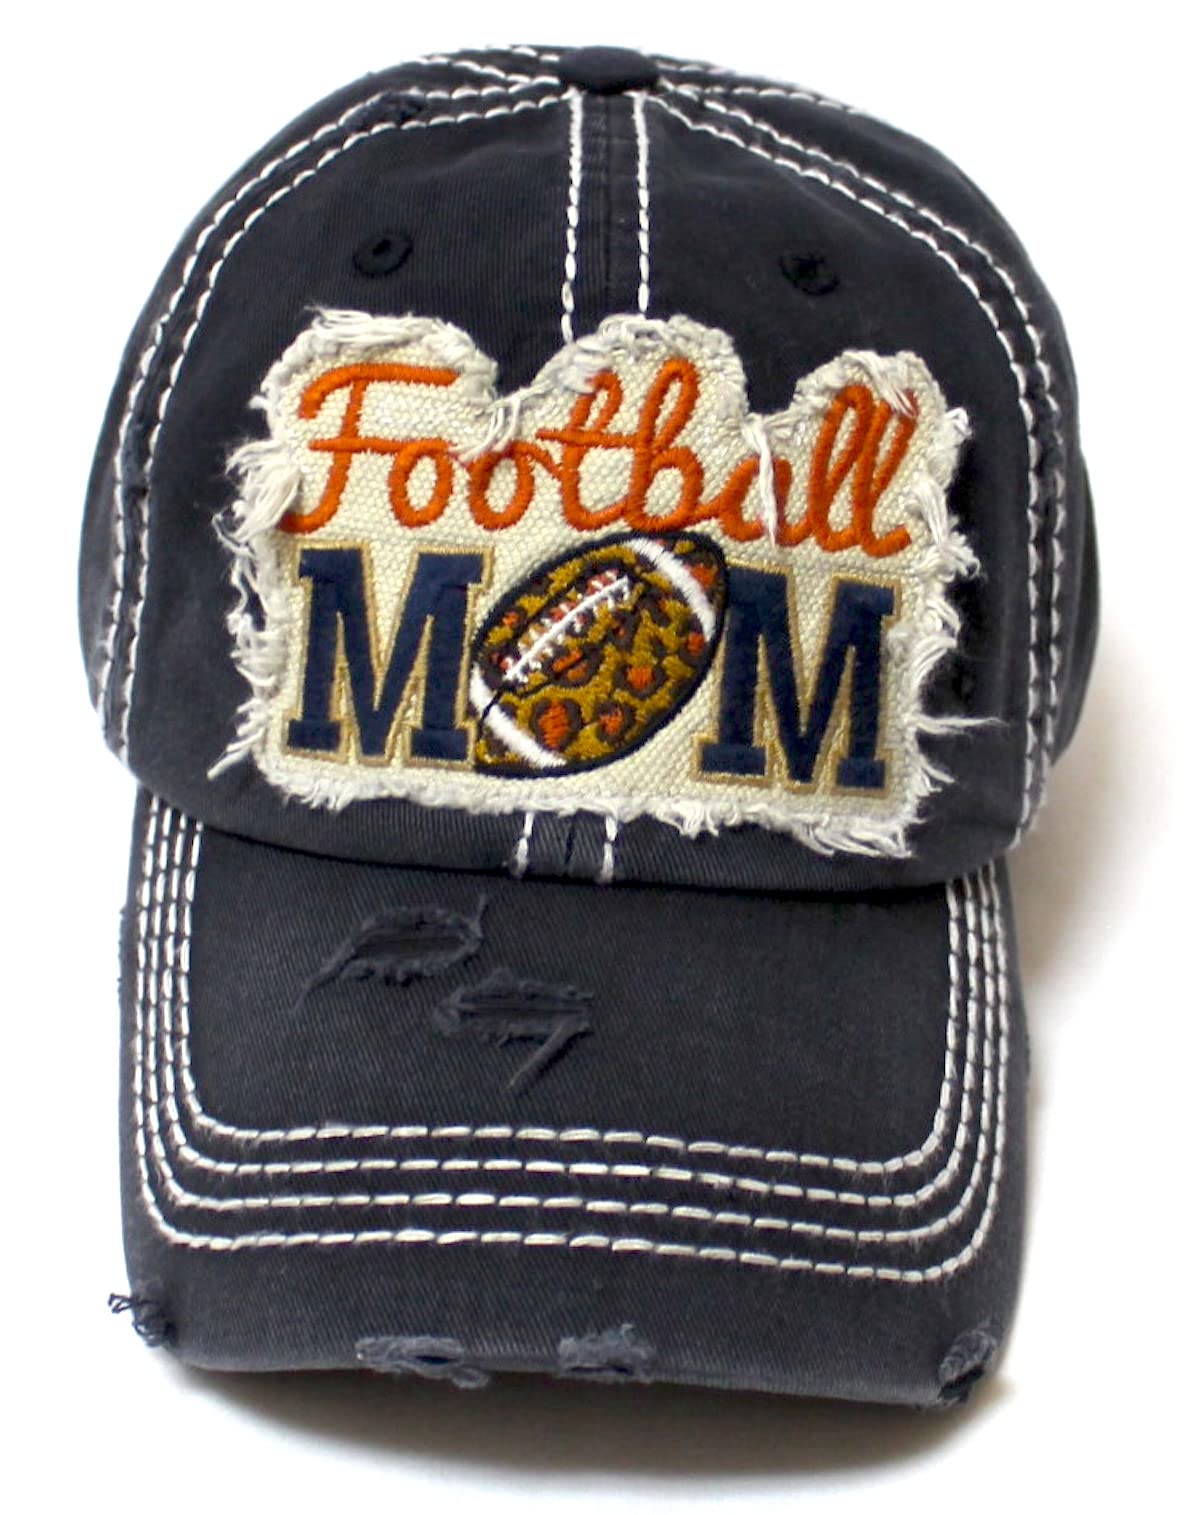 CAPS 'N VINTAGE Women's Ballcap Leopard Print Football MOM Patch Embroidery Monogram Hat, Black